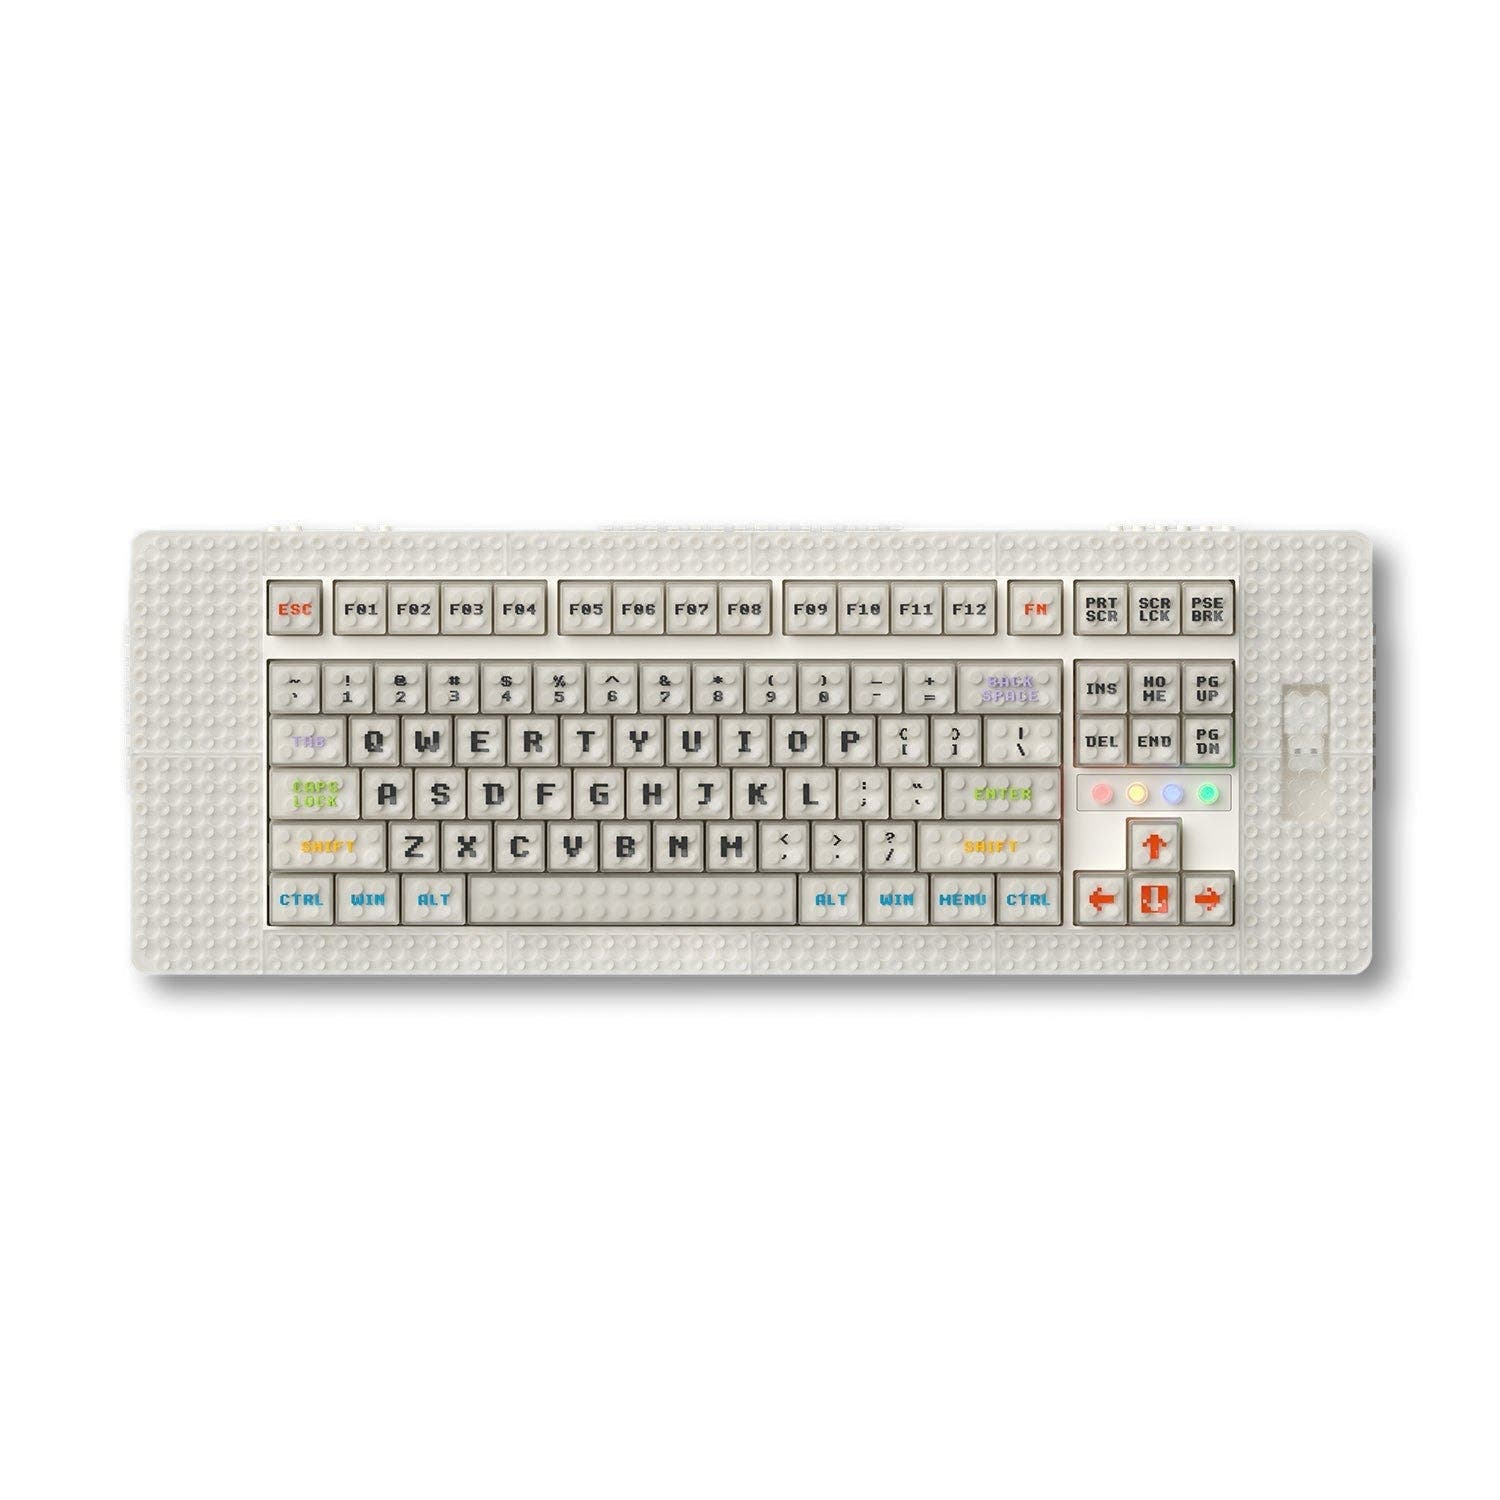 MelGeek Pixel Canvas, World's First Brick-compatible Custom Mechanical Keyboard Canvas / Kailh Custom Tactile